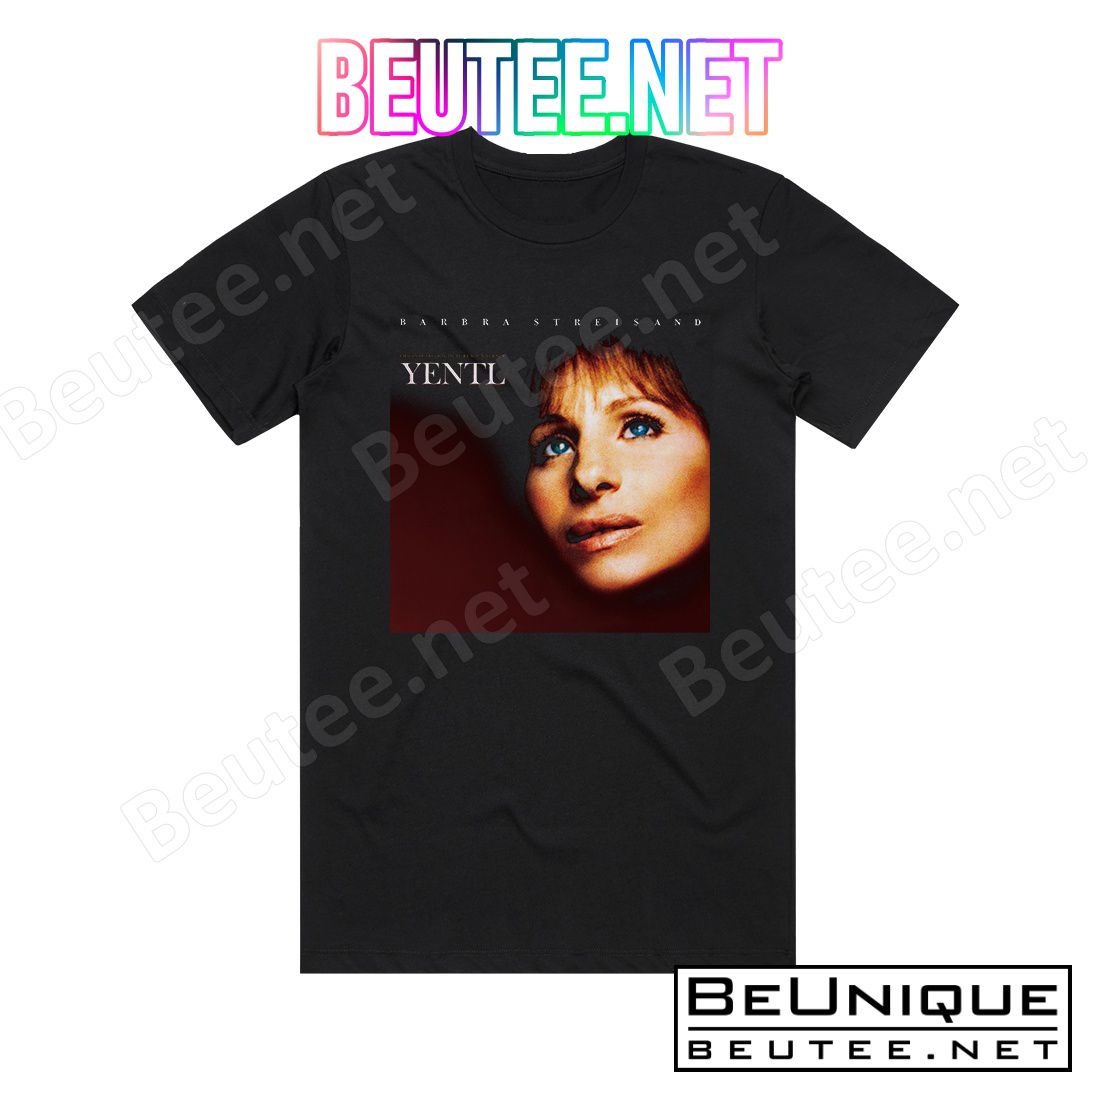 Barbra Streisand Yentl  Original Motion Picture Soundtrack Album Cover T-Shirt